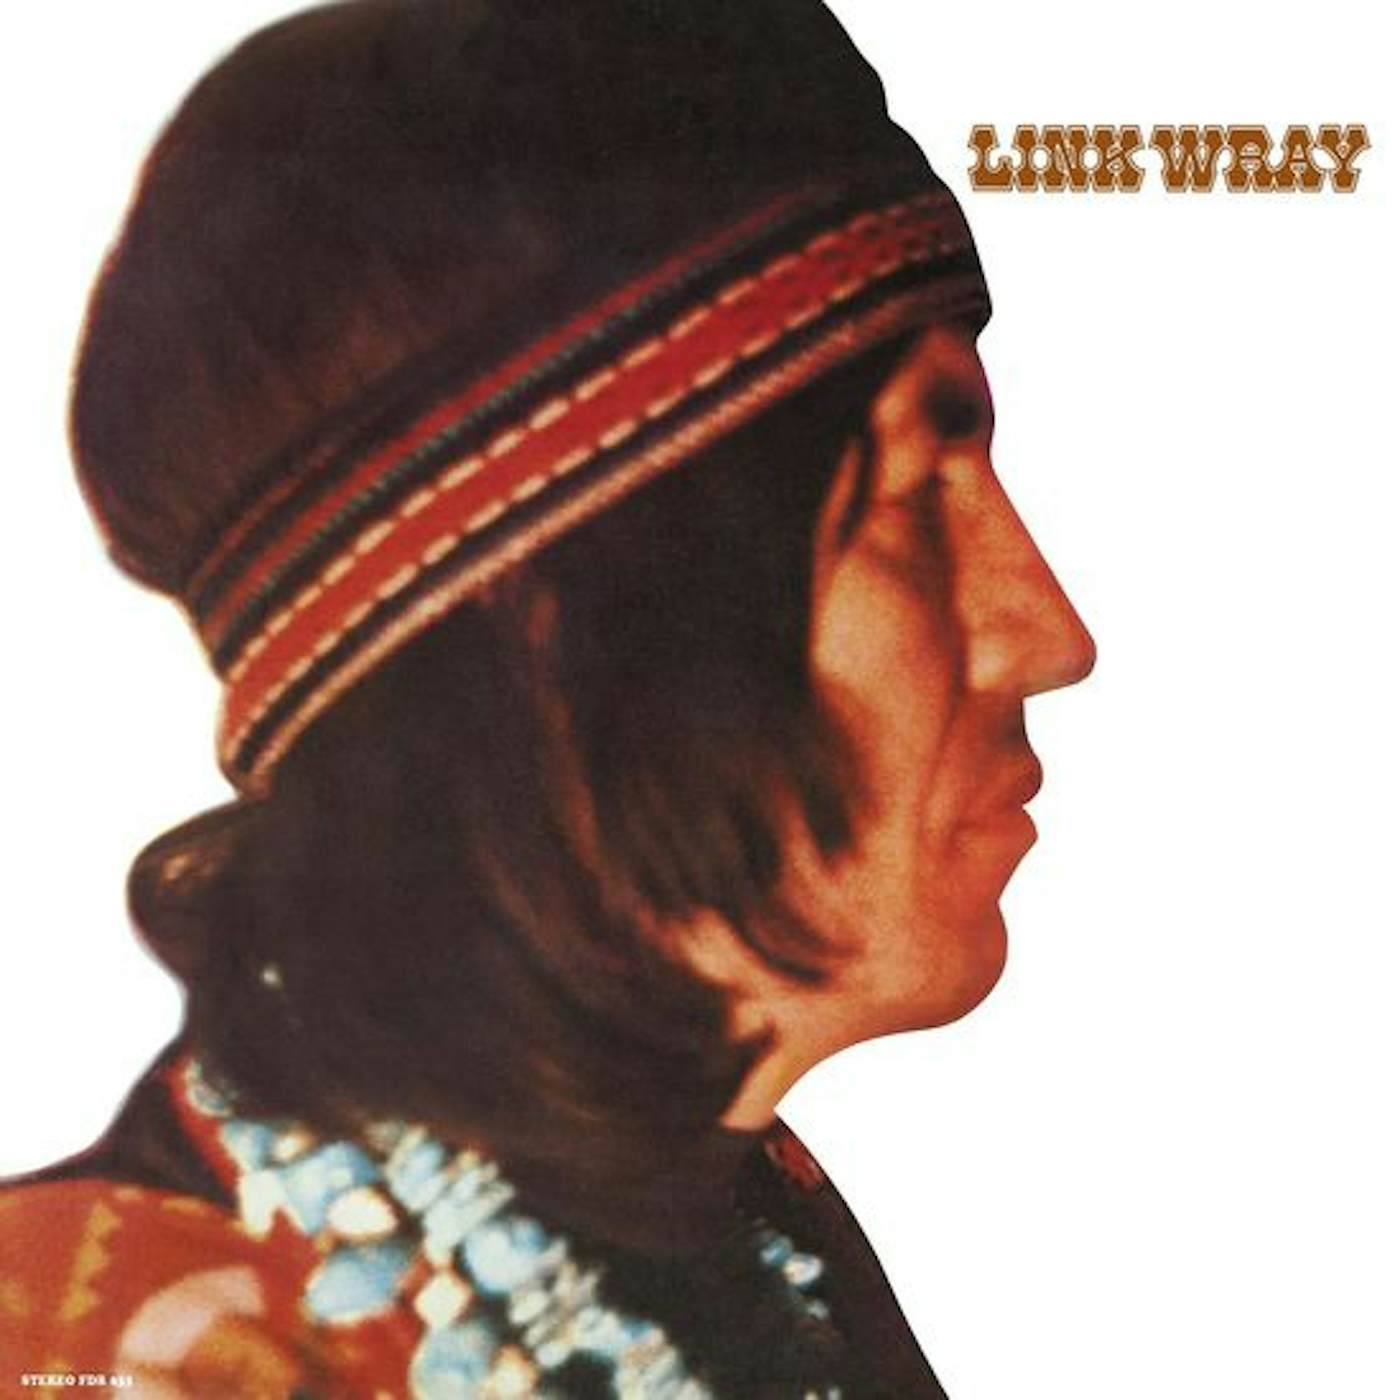 Link Wray Vinyl Record